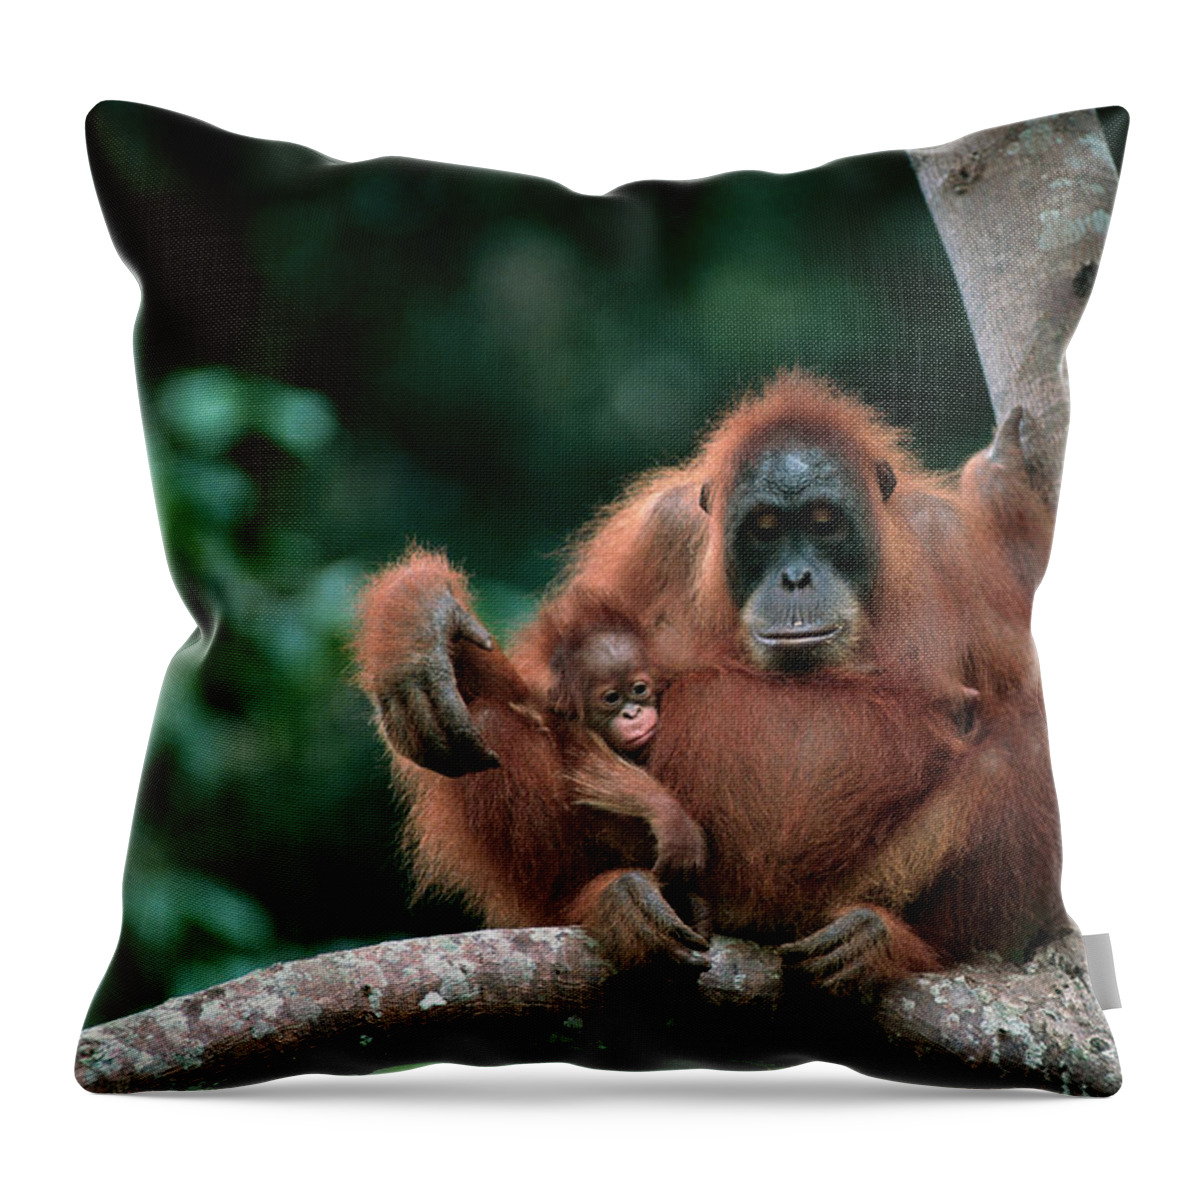 Animal Themes Throw Pillow featuring the photograph Orangutan Pongo Pygmaeus And Baby by Anup Shah